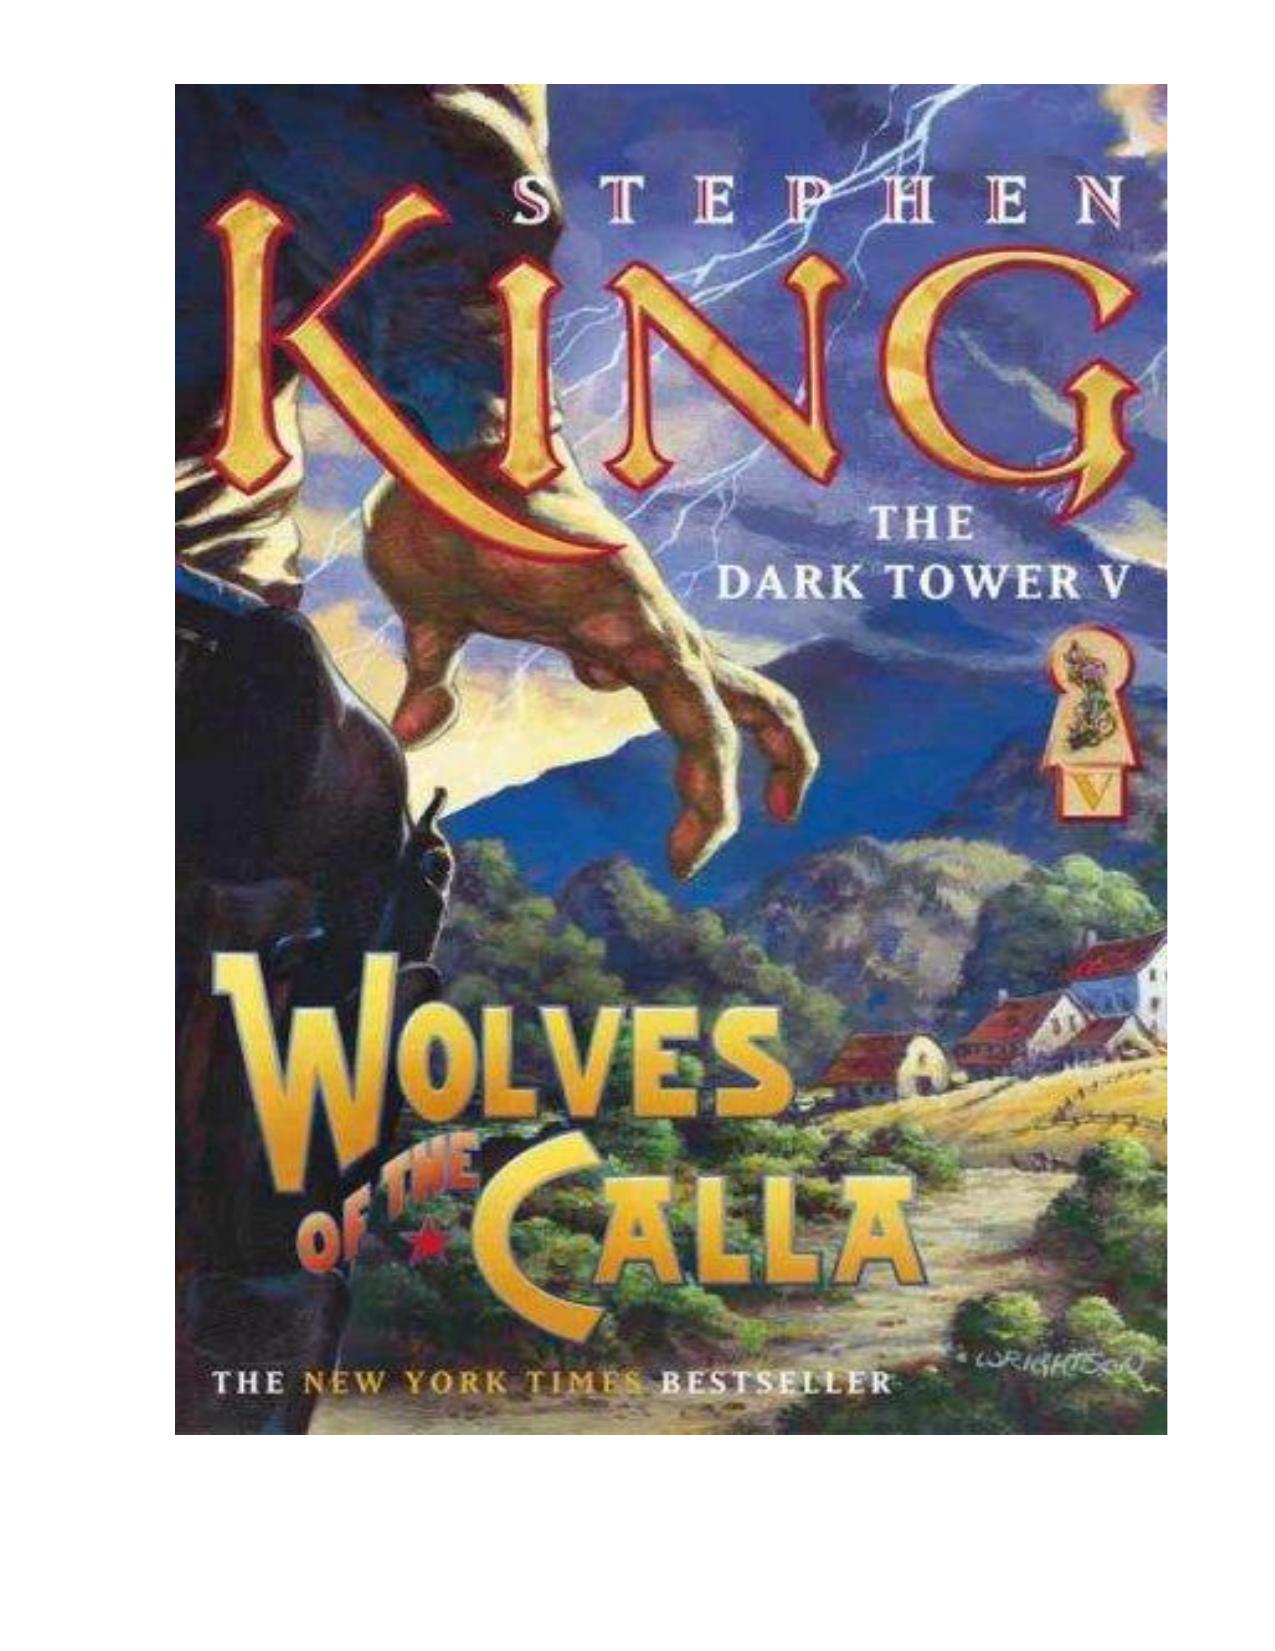 King, Stephen - The Dark Tower V by King Stephen